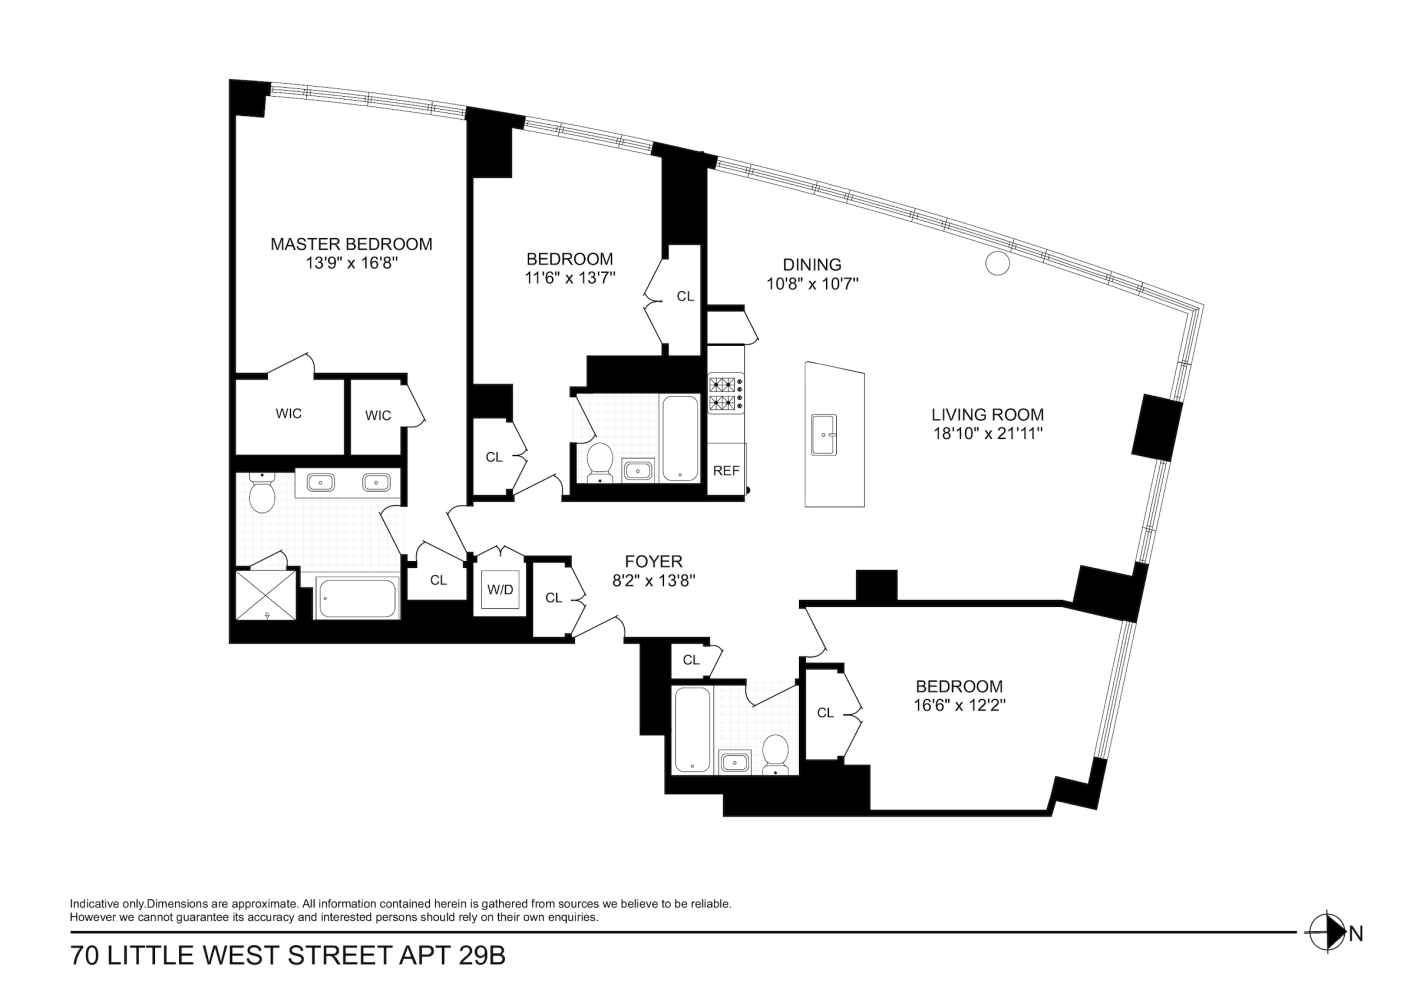 Floorplan for 70 Little West Street, 29B